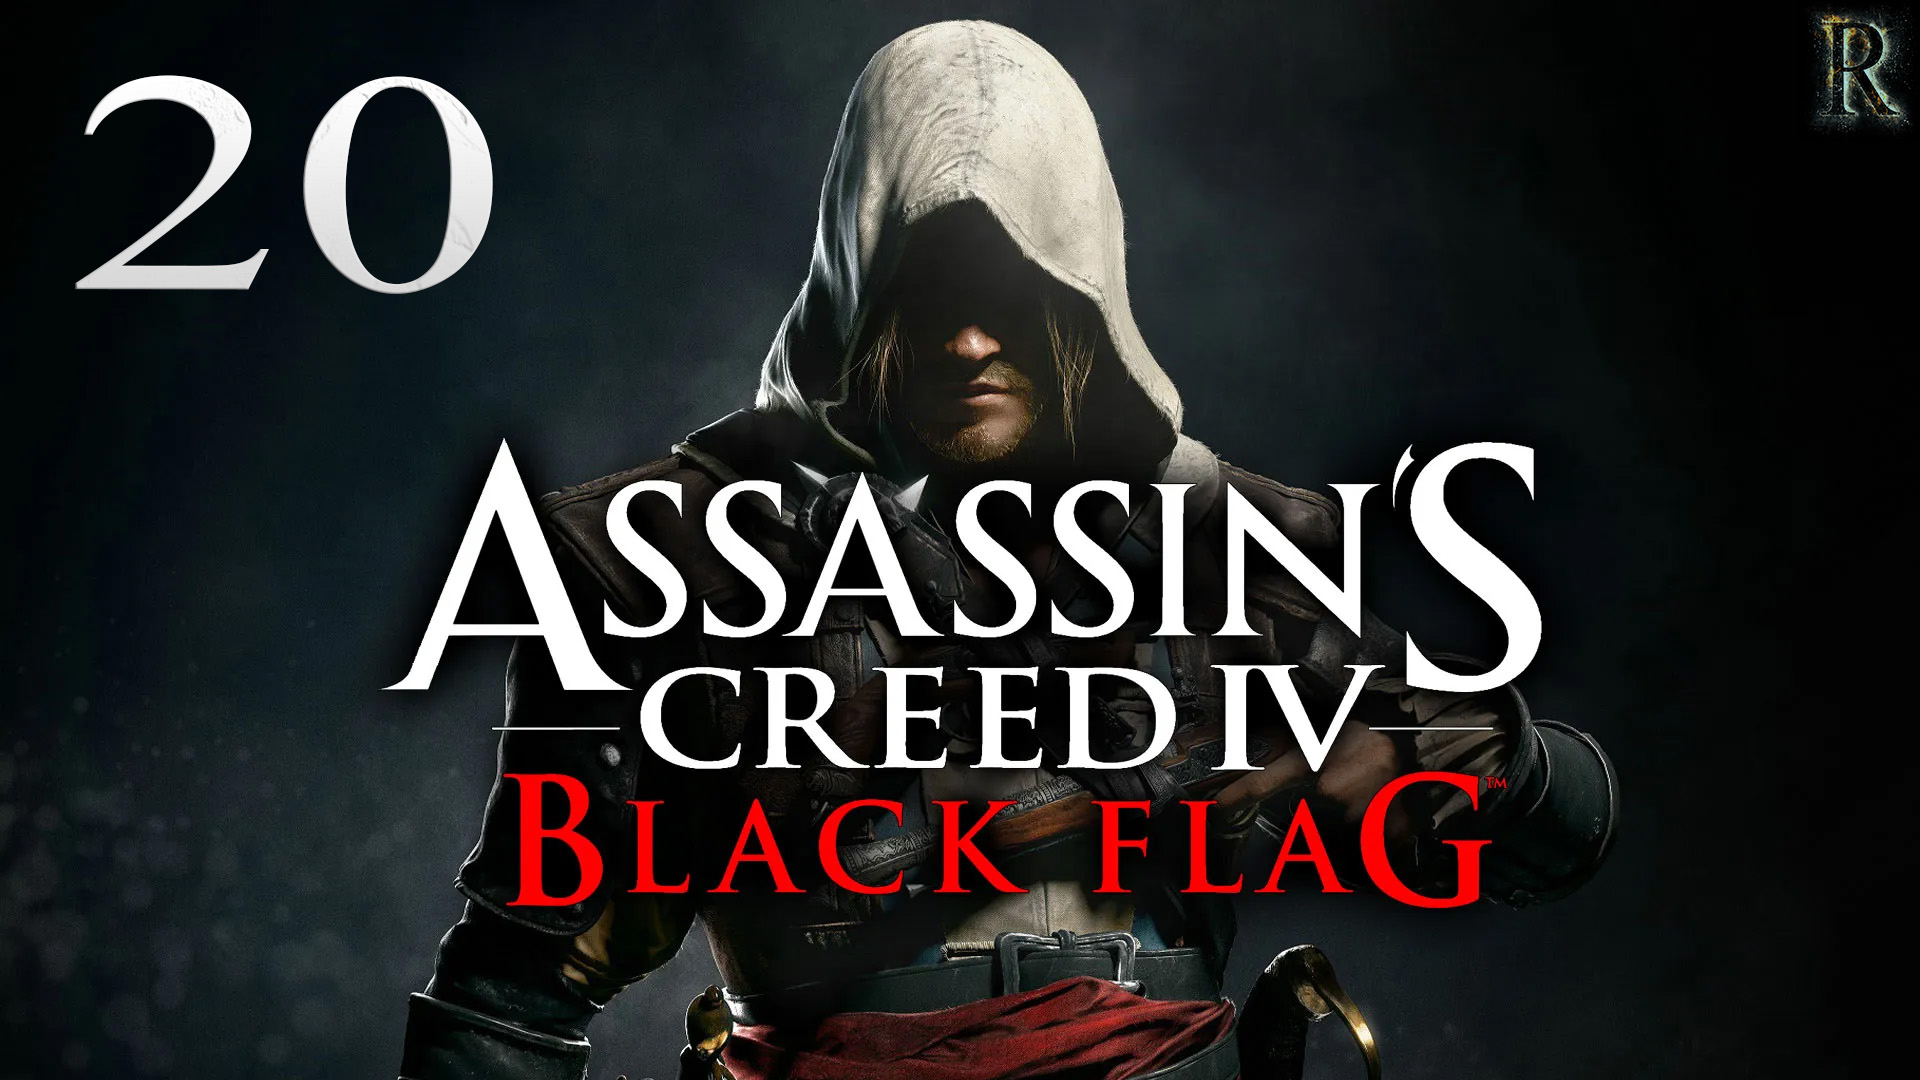 Assassin's Creed IV Black Flag -  20 серия. (Страдания хуже смерти / Горячка)